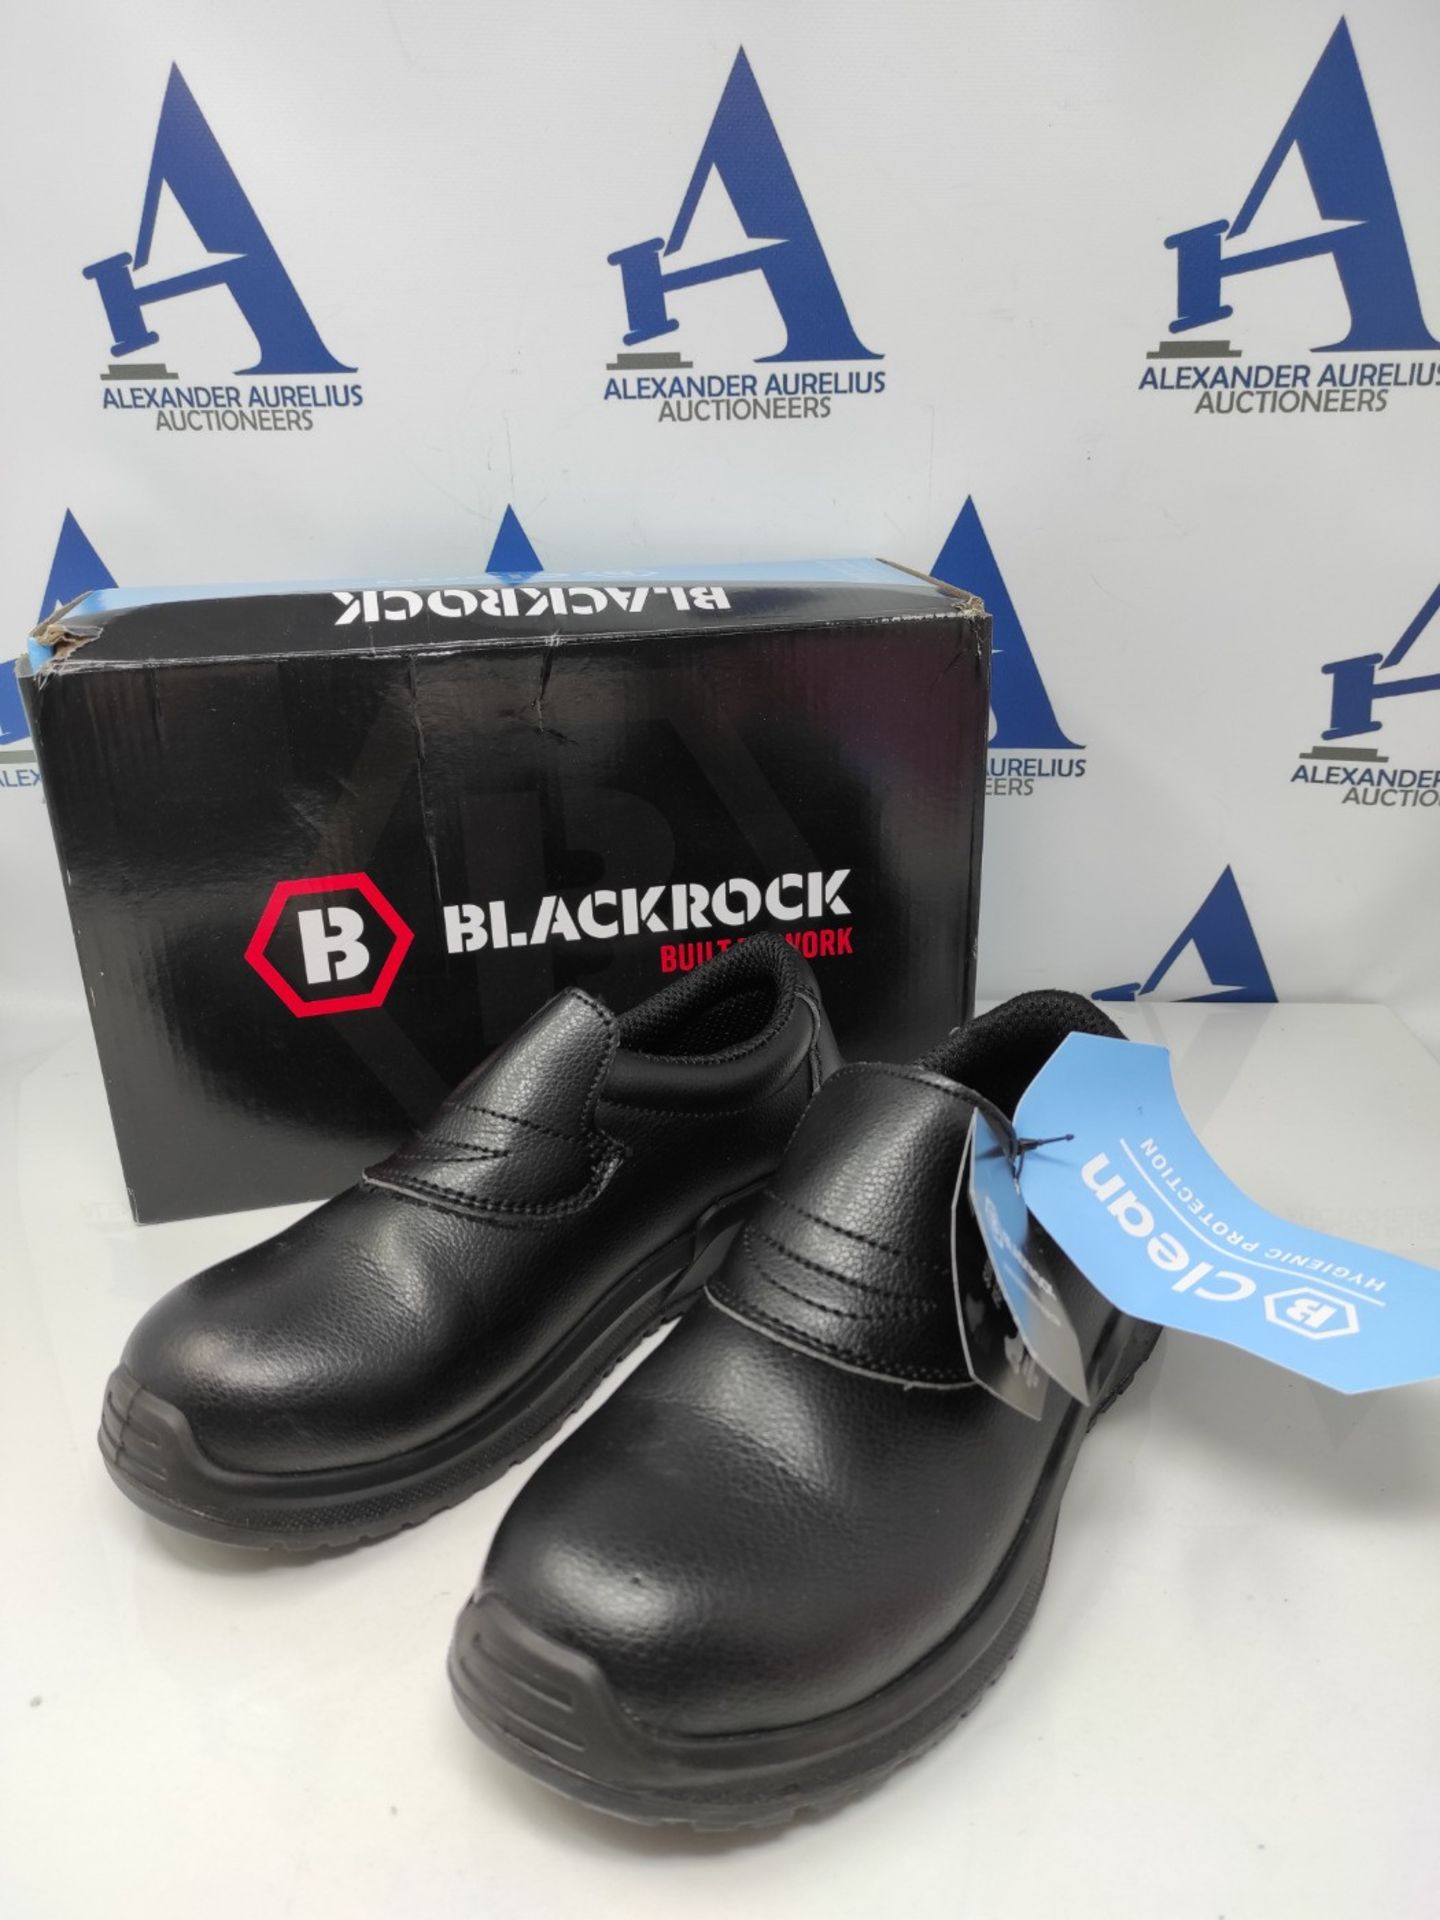 Blackrock Black Hygiene Slip-On Safety Shoe Steel Toe Cap Shoes Non Slip Shoes, Nursin - Image 2 of 3